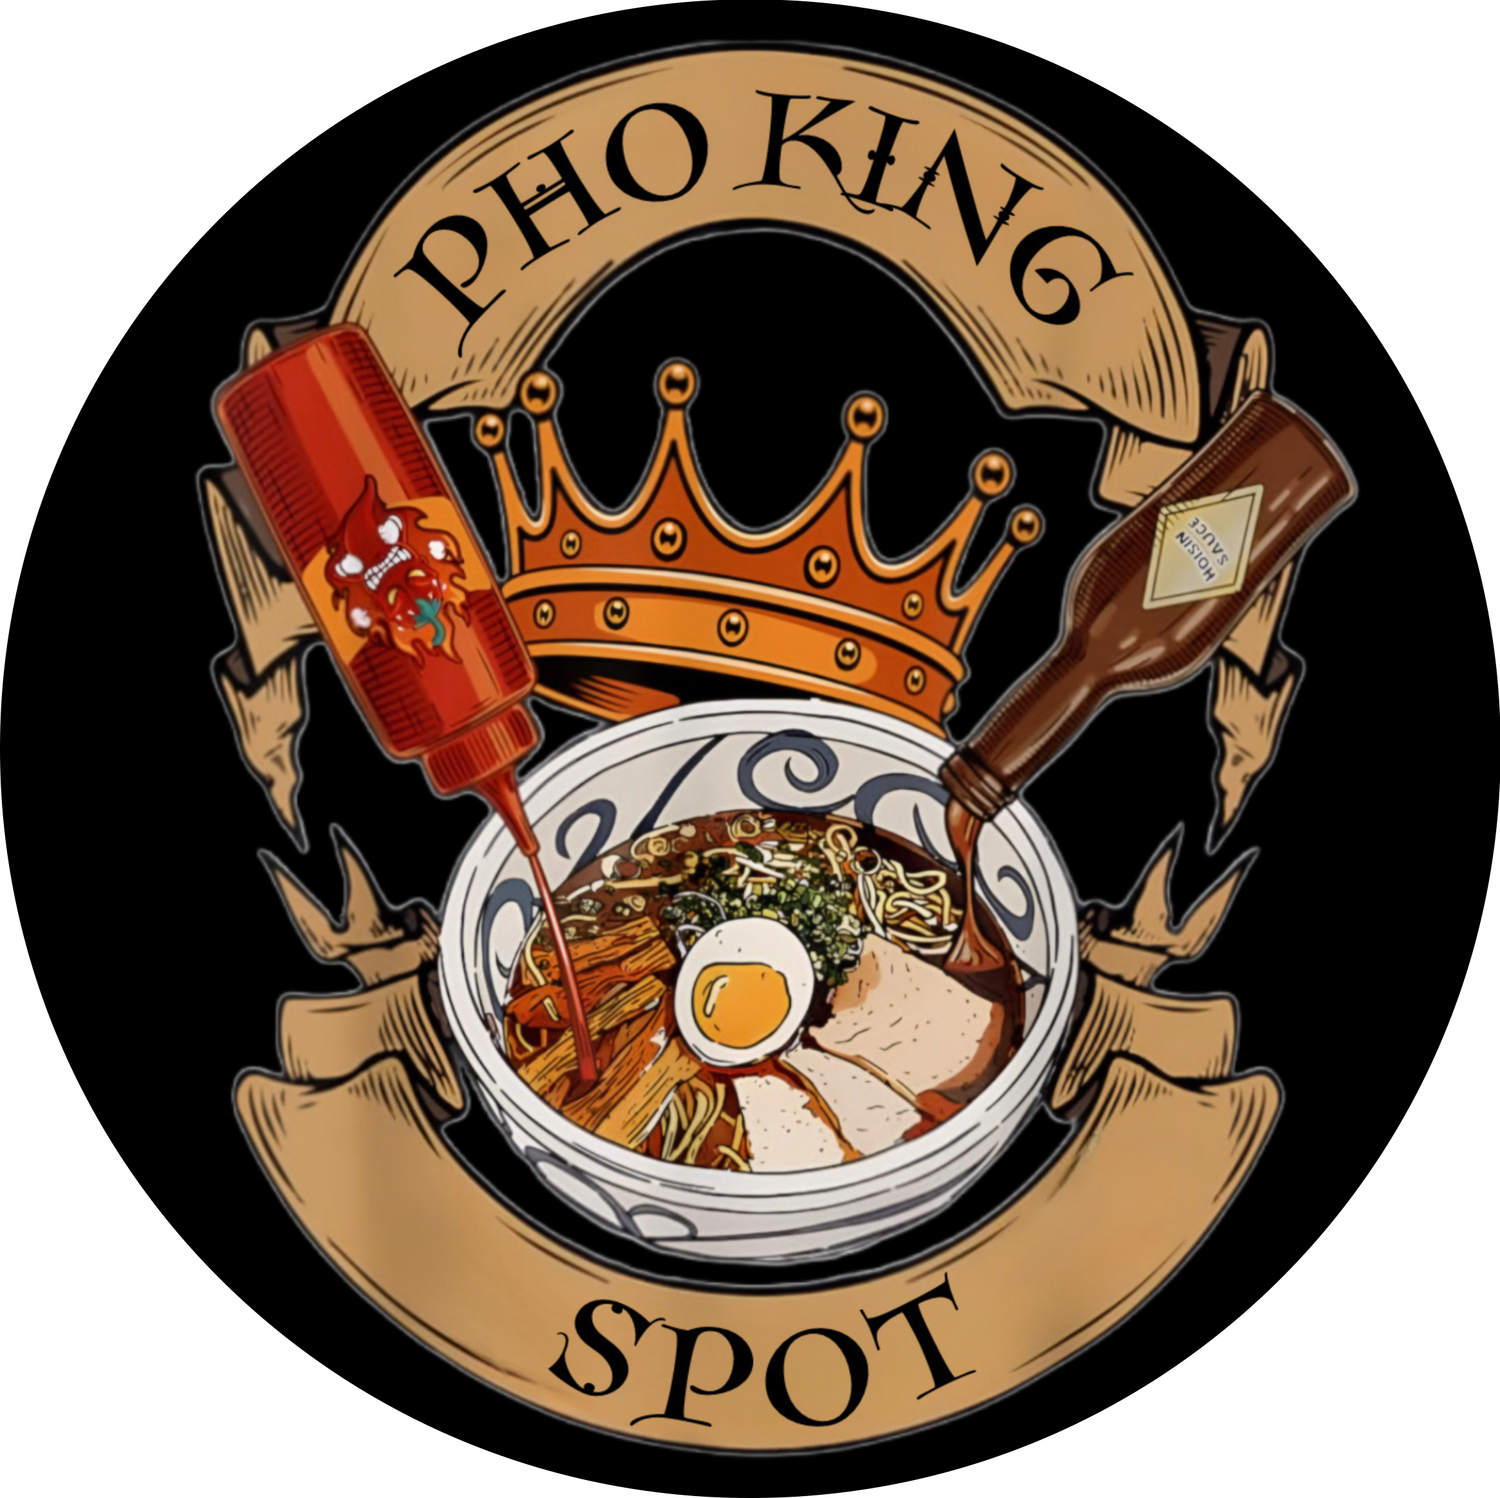 Pho King Spot